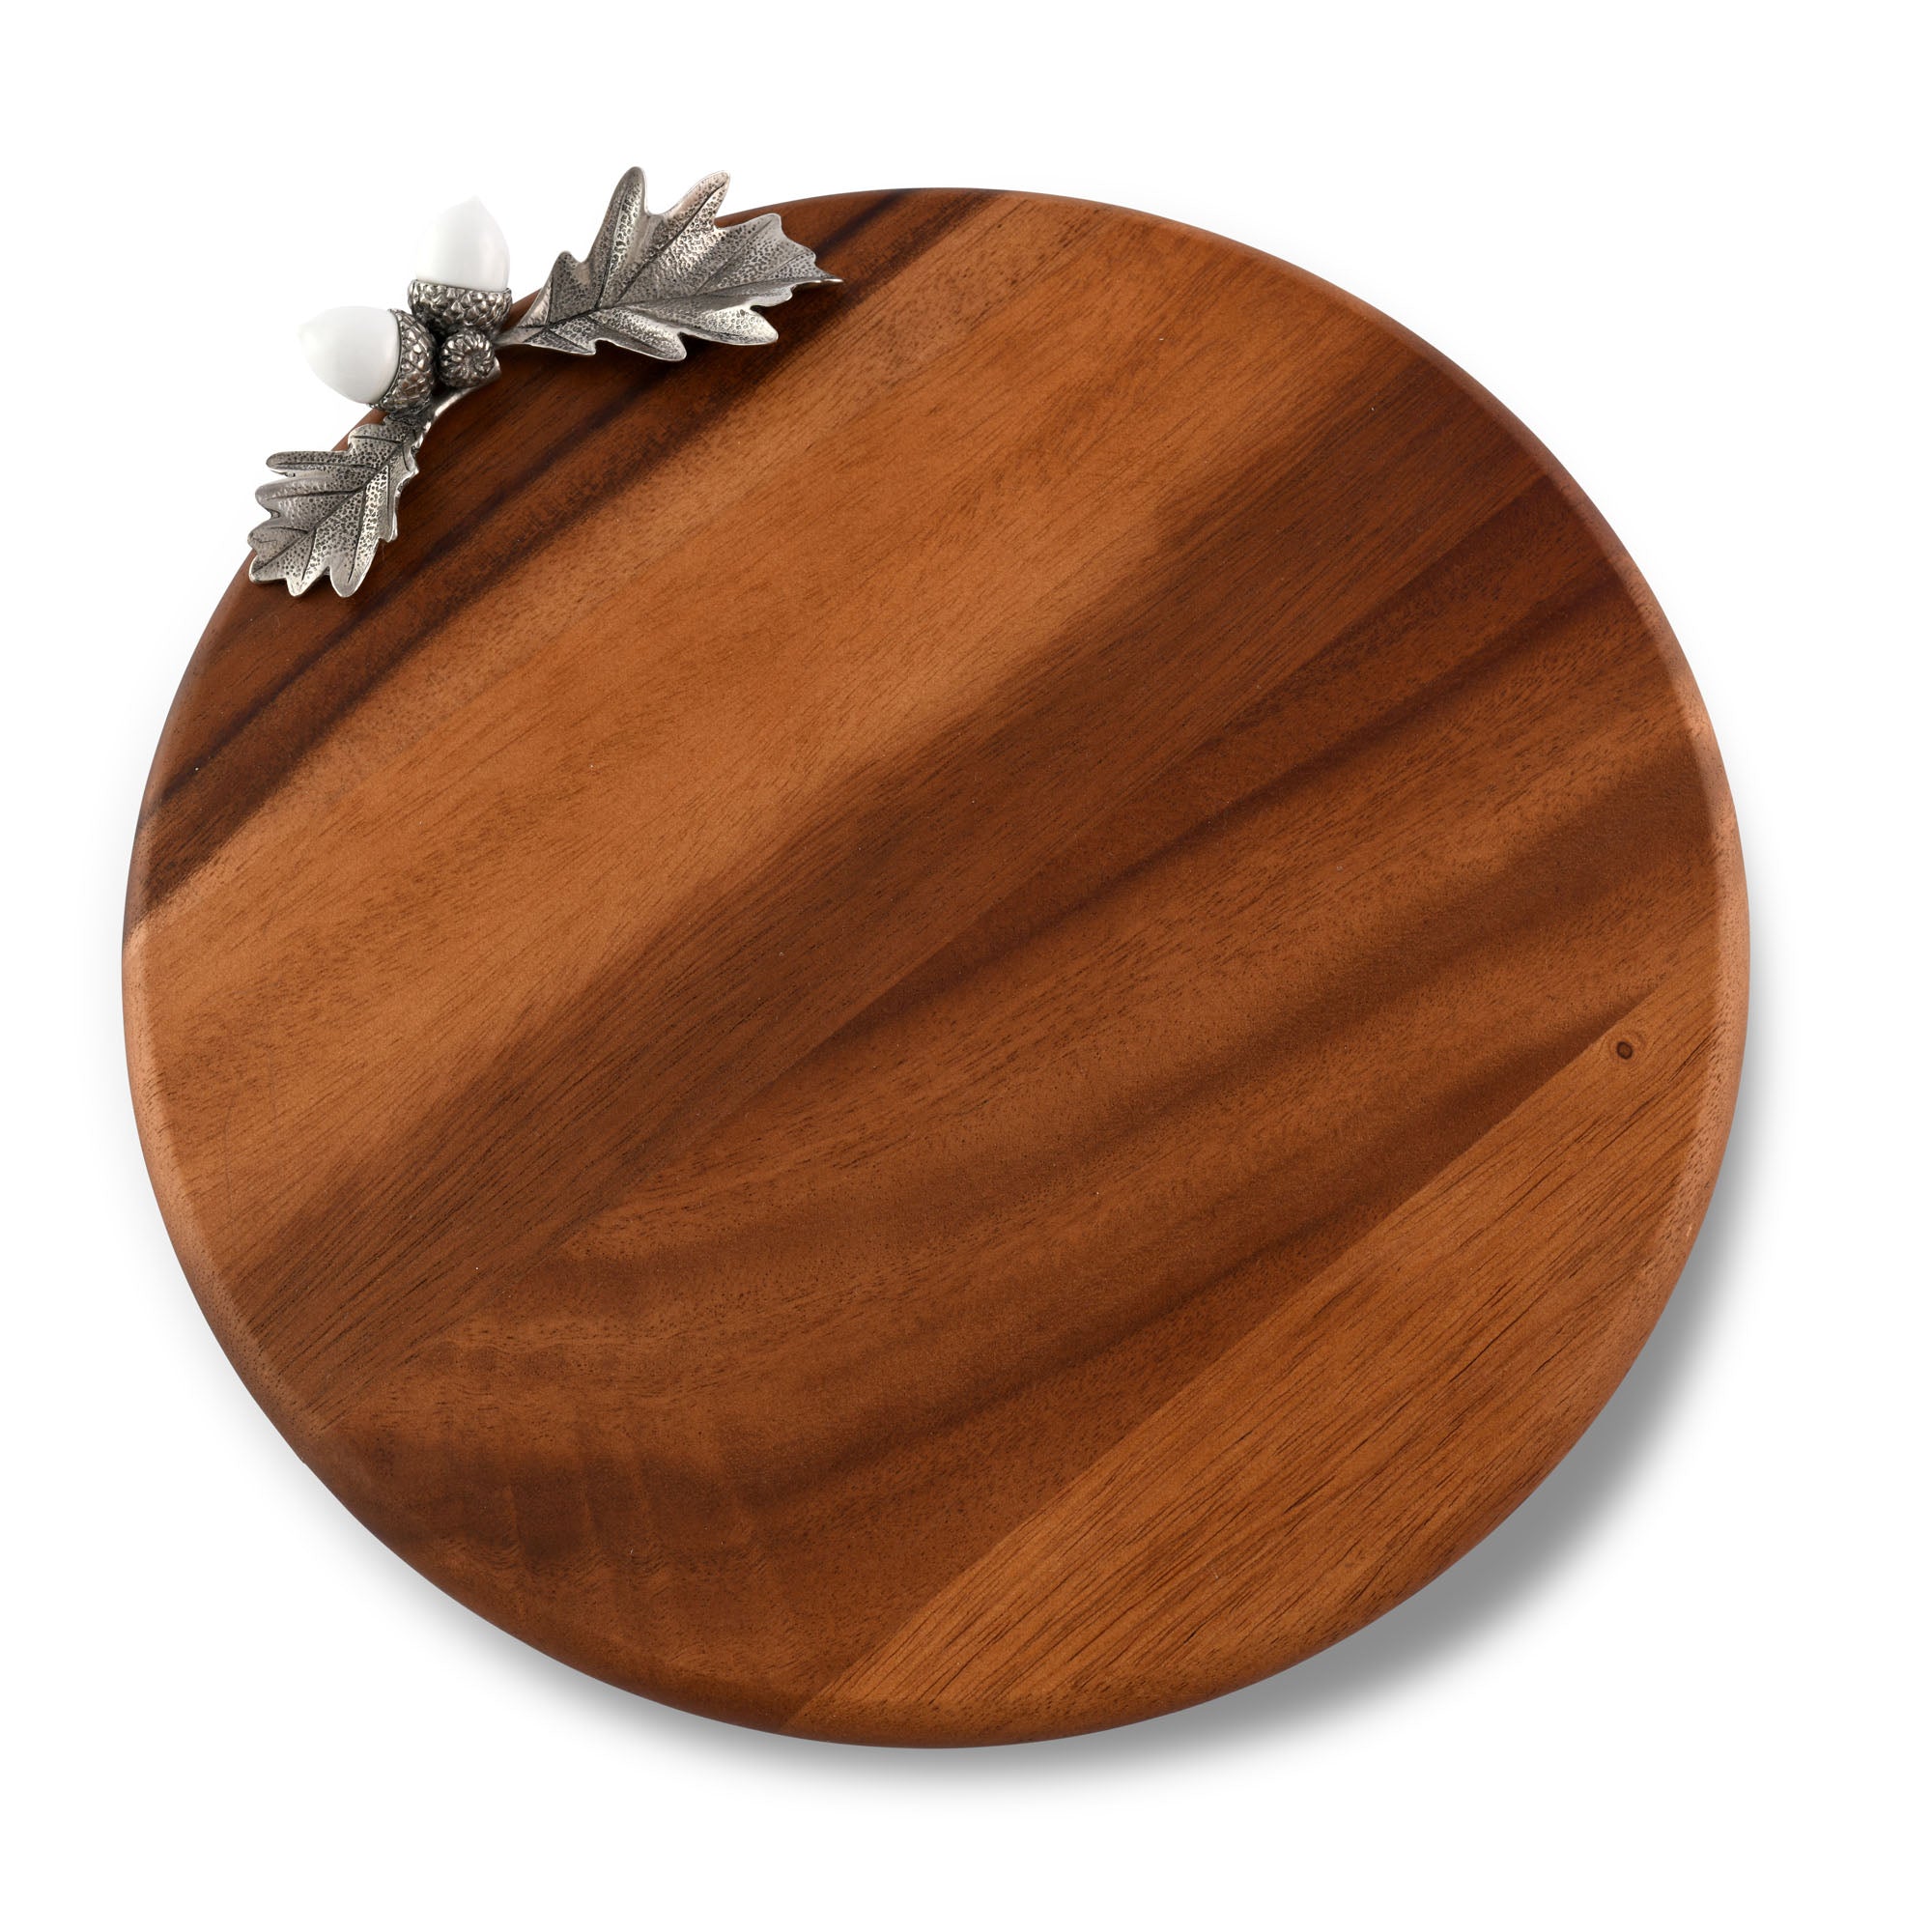 Vagabond House Cheese Board - Porcelain Acorn Oak Product Image